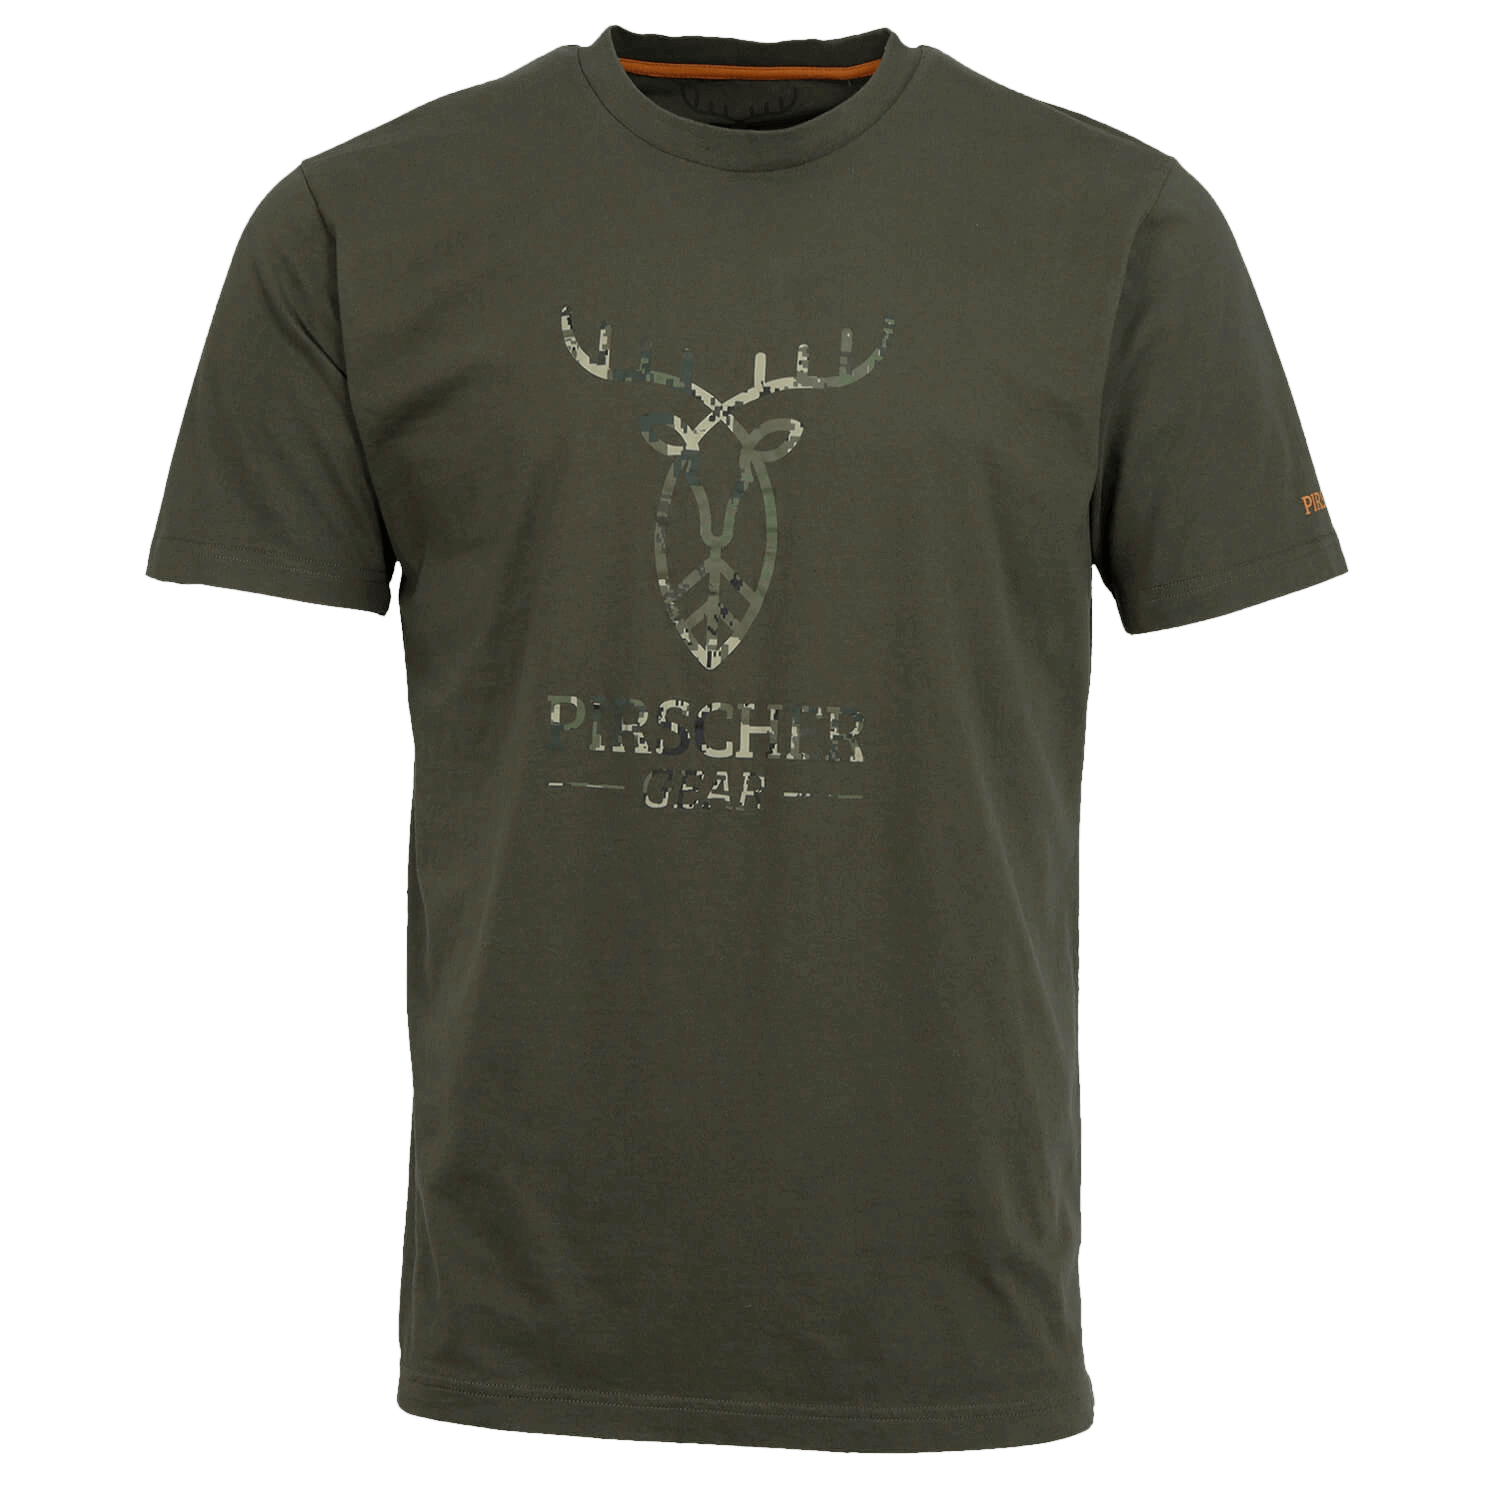 Pirscher Gear T-Shirt Full Logo (Optimax) - Summer Hunting Clothing